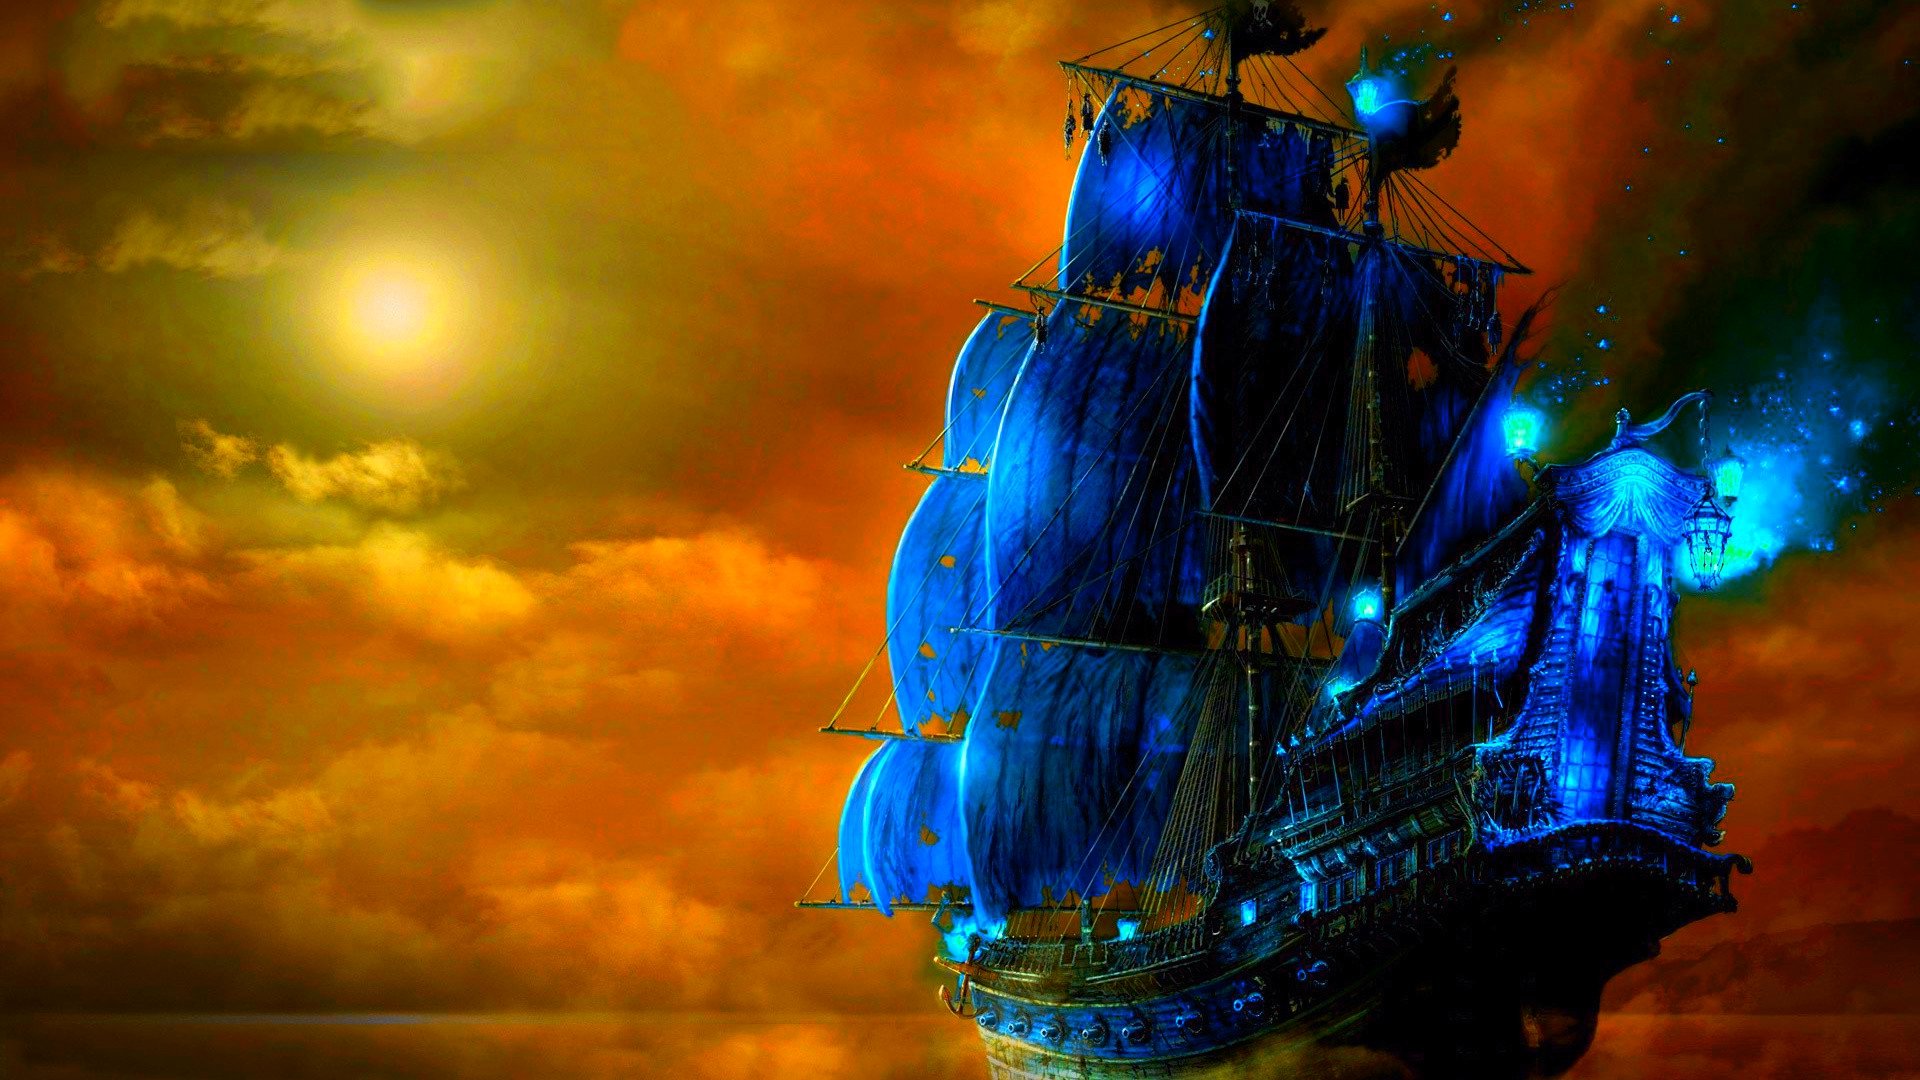 fantasy art ship boats ocean sea wallpaper background